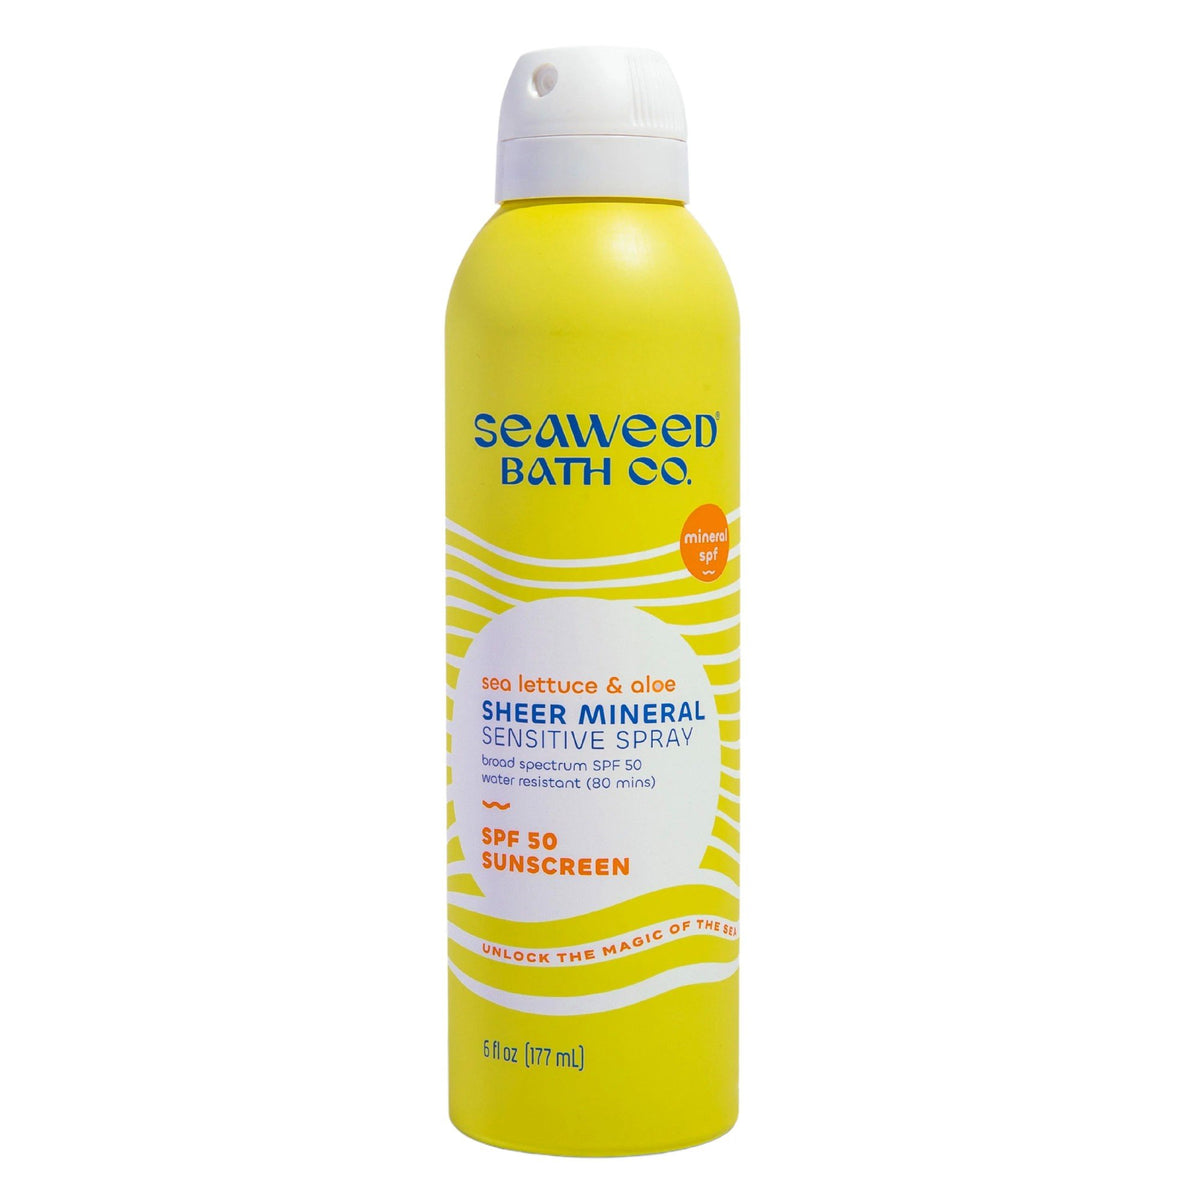 The Seaweed Bath Co. Sheer Mineral Sensitive Spray SPF 50 6 oz Liquid